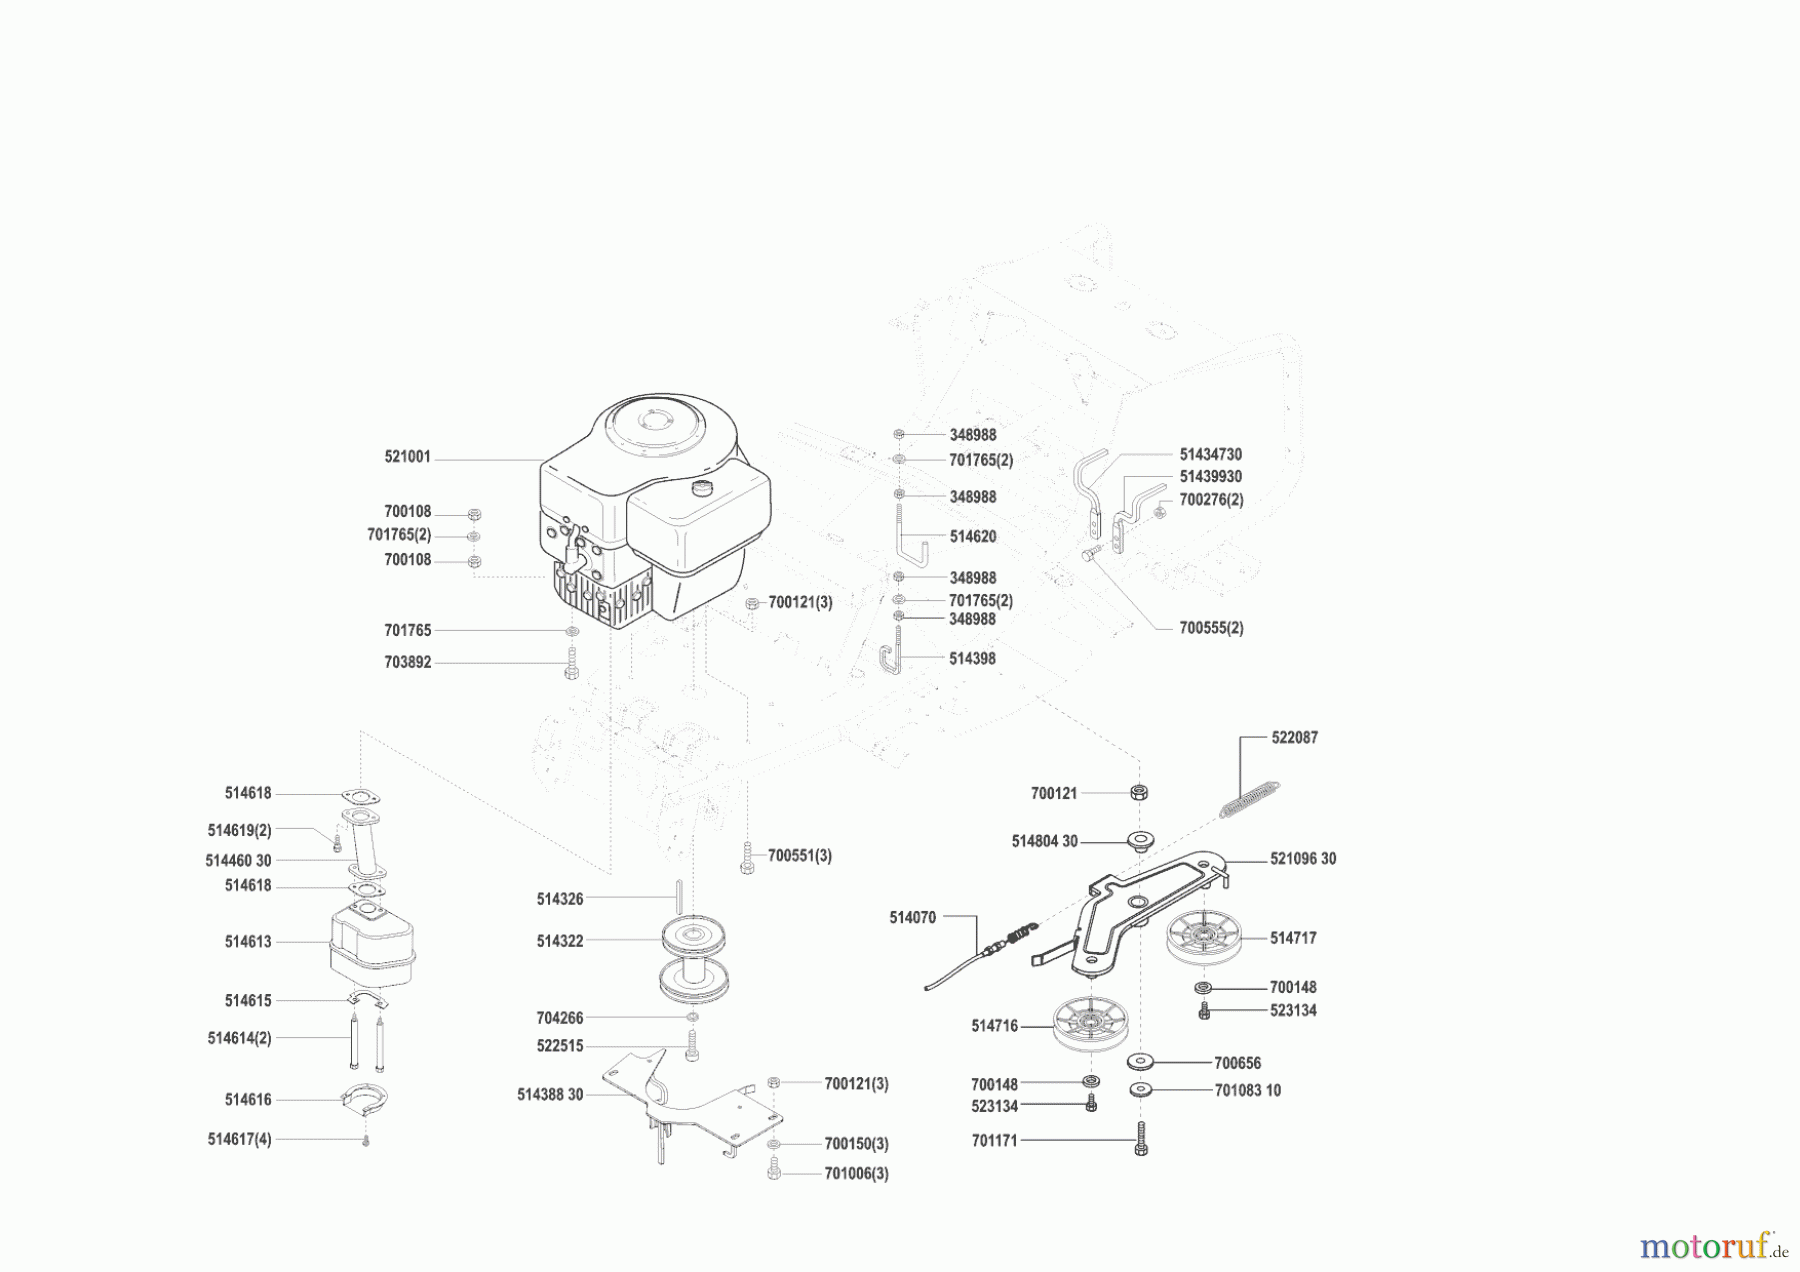  AL-KO Gartentechnik Rasentraktor T 10 vor 01/2001 Seite 4